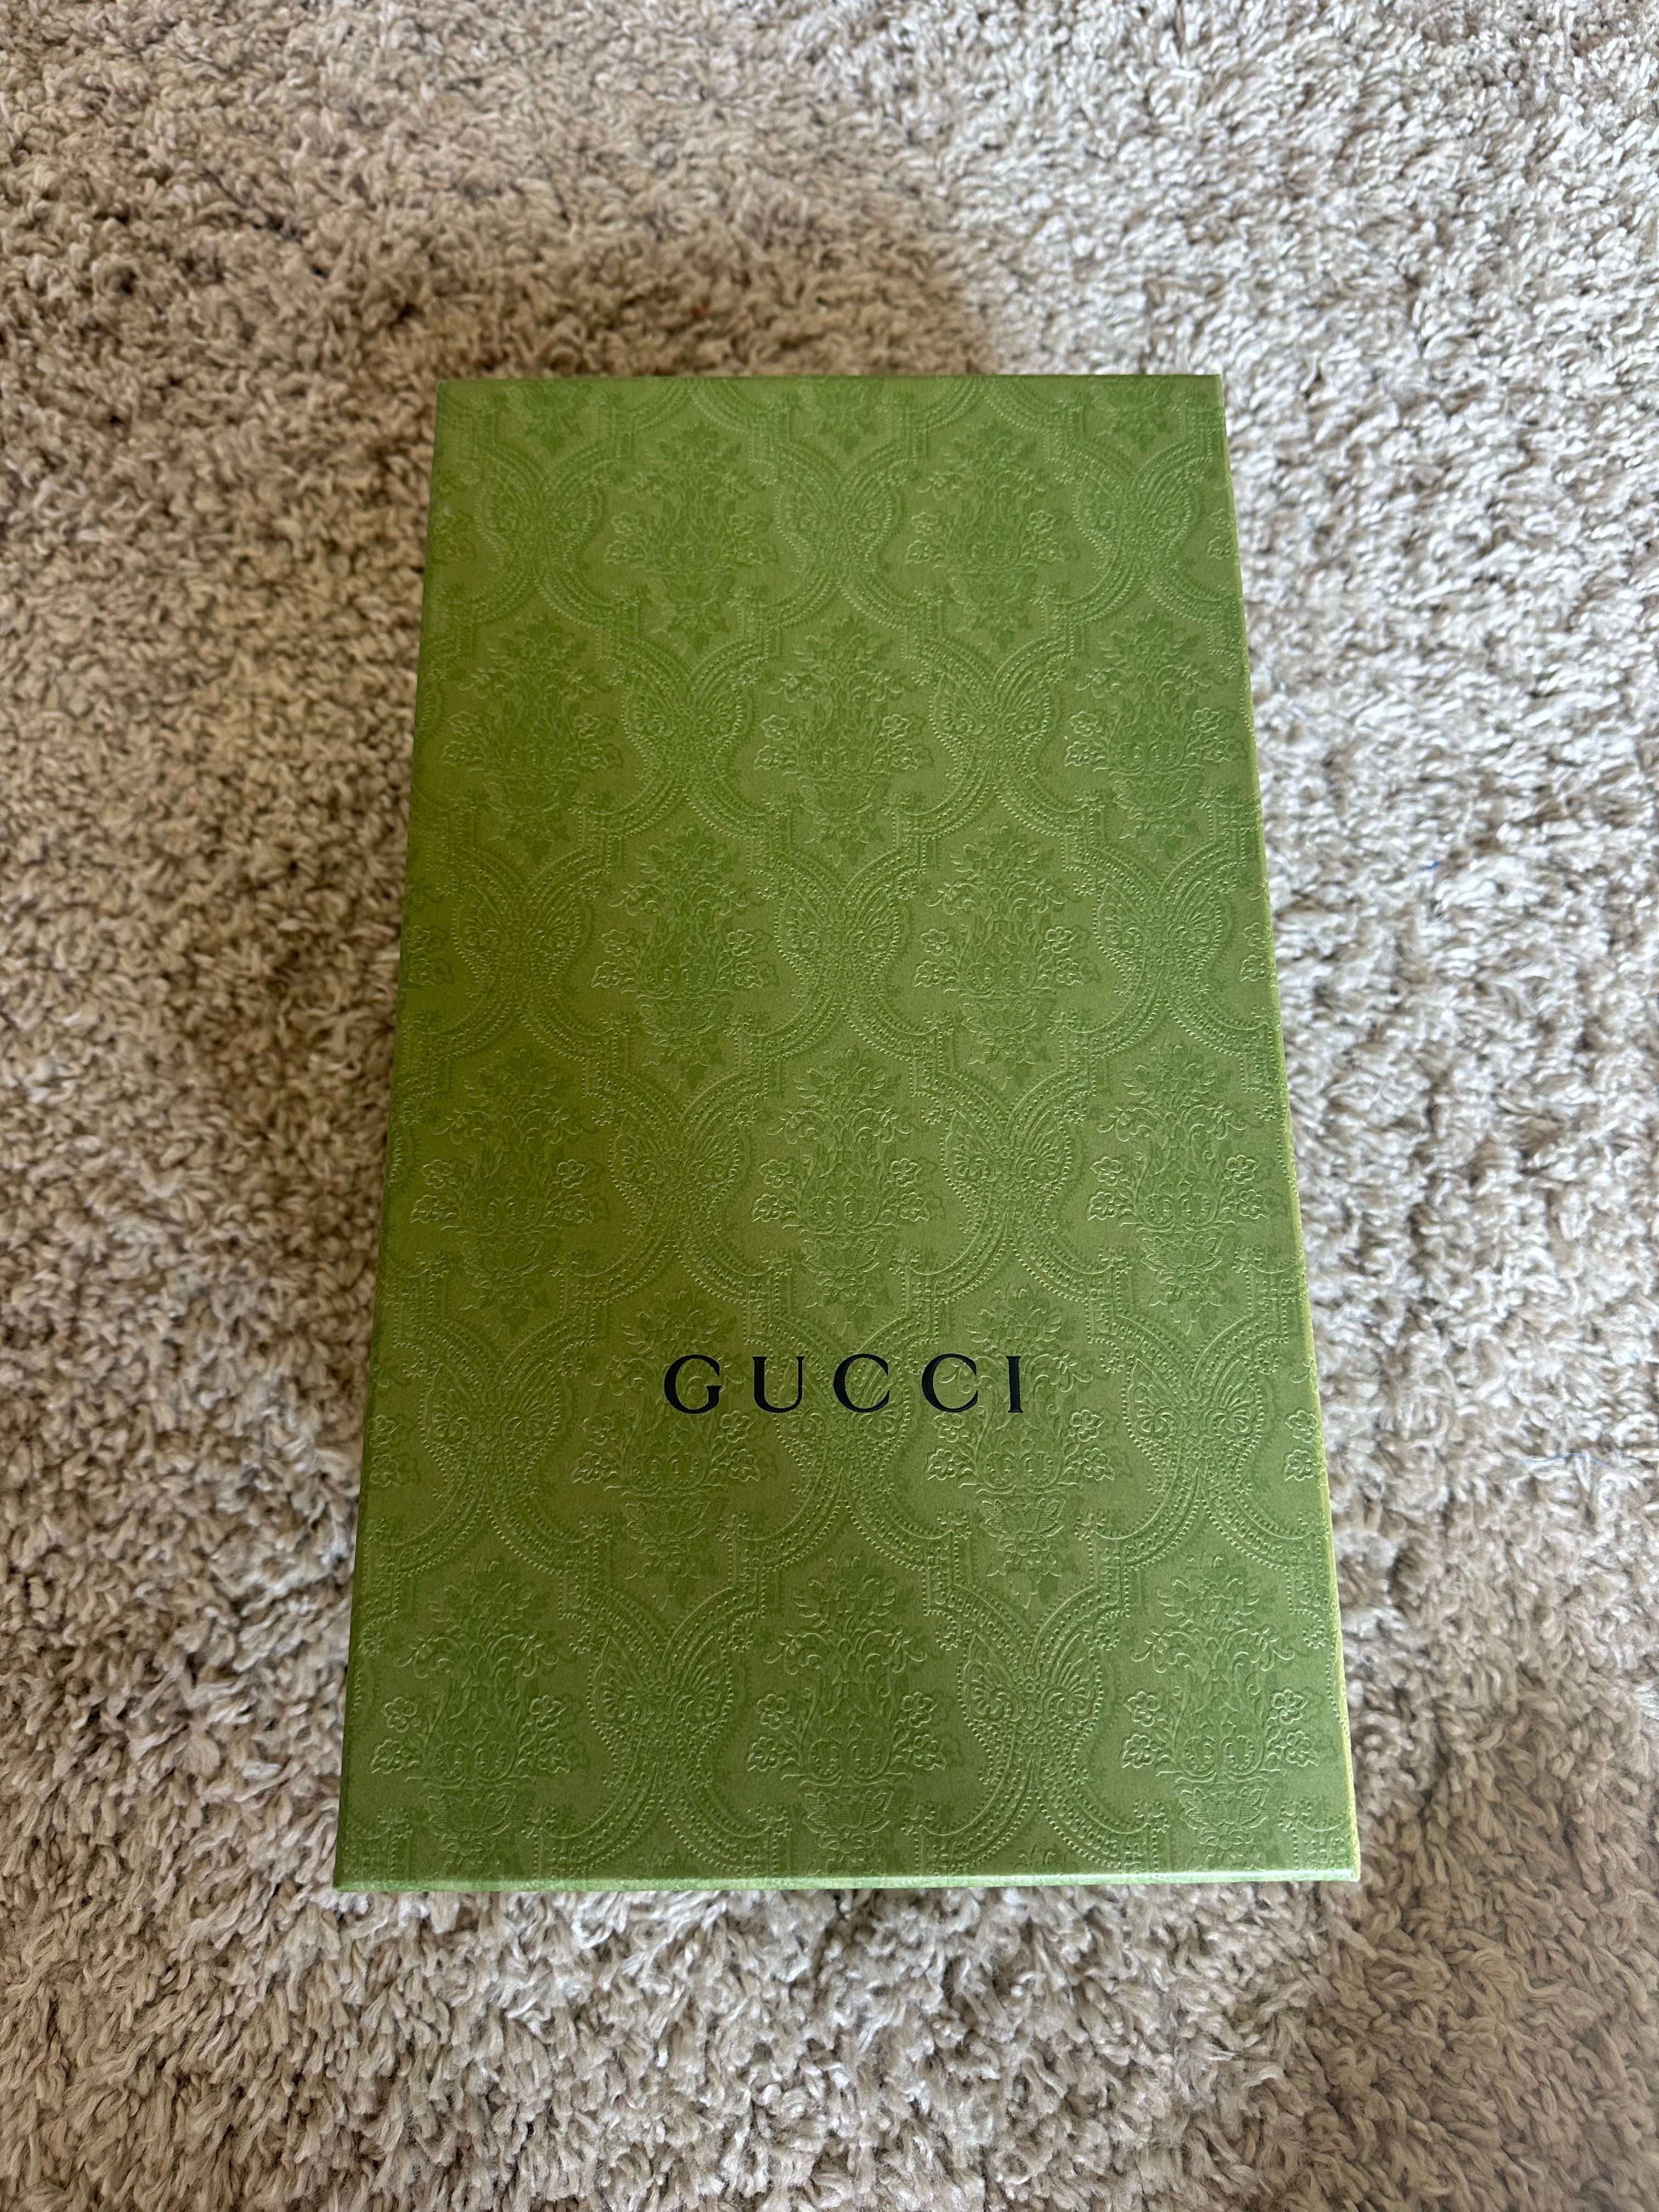 Gucci GG Loafers (7/EU40)